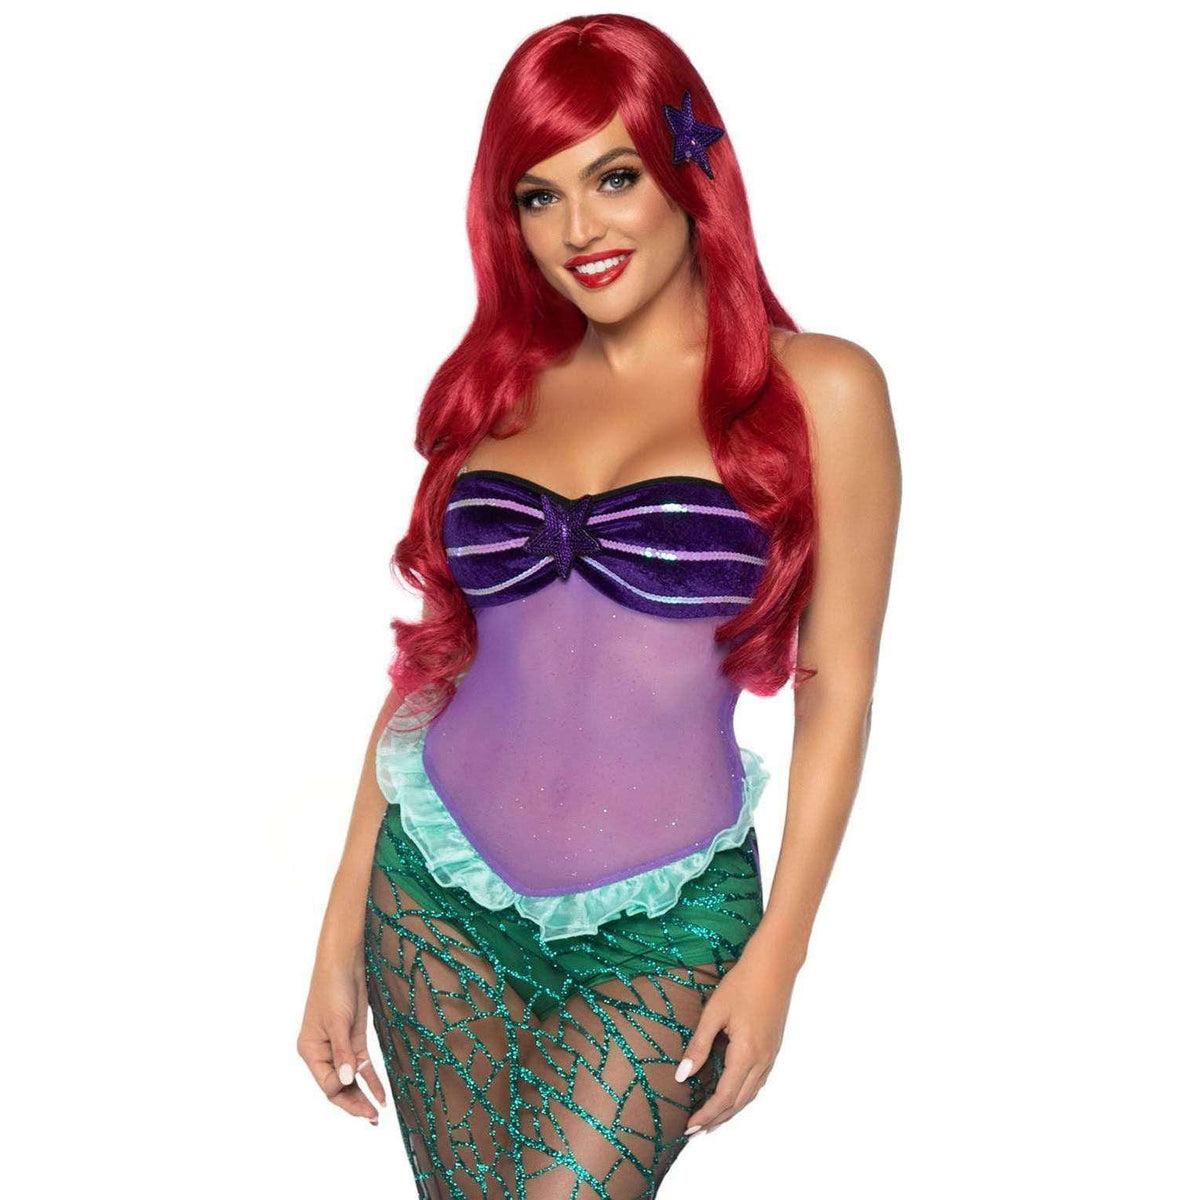 Under the Sea Mermaid Women's Sexy Costume